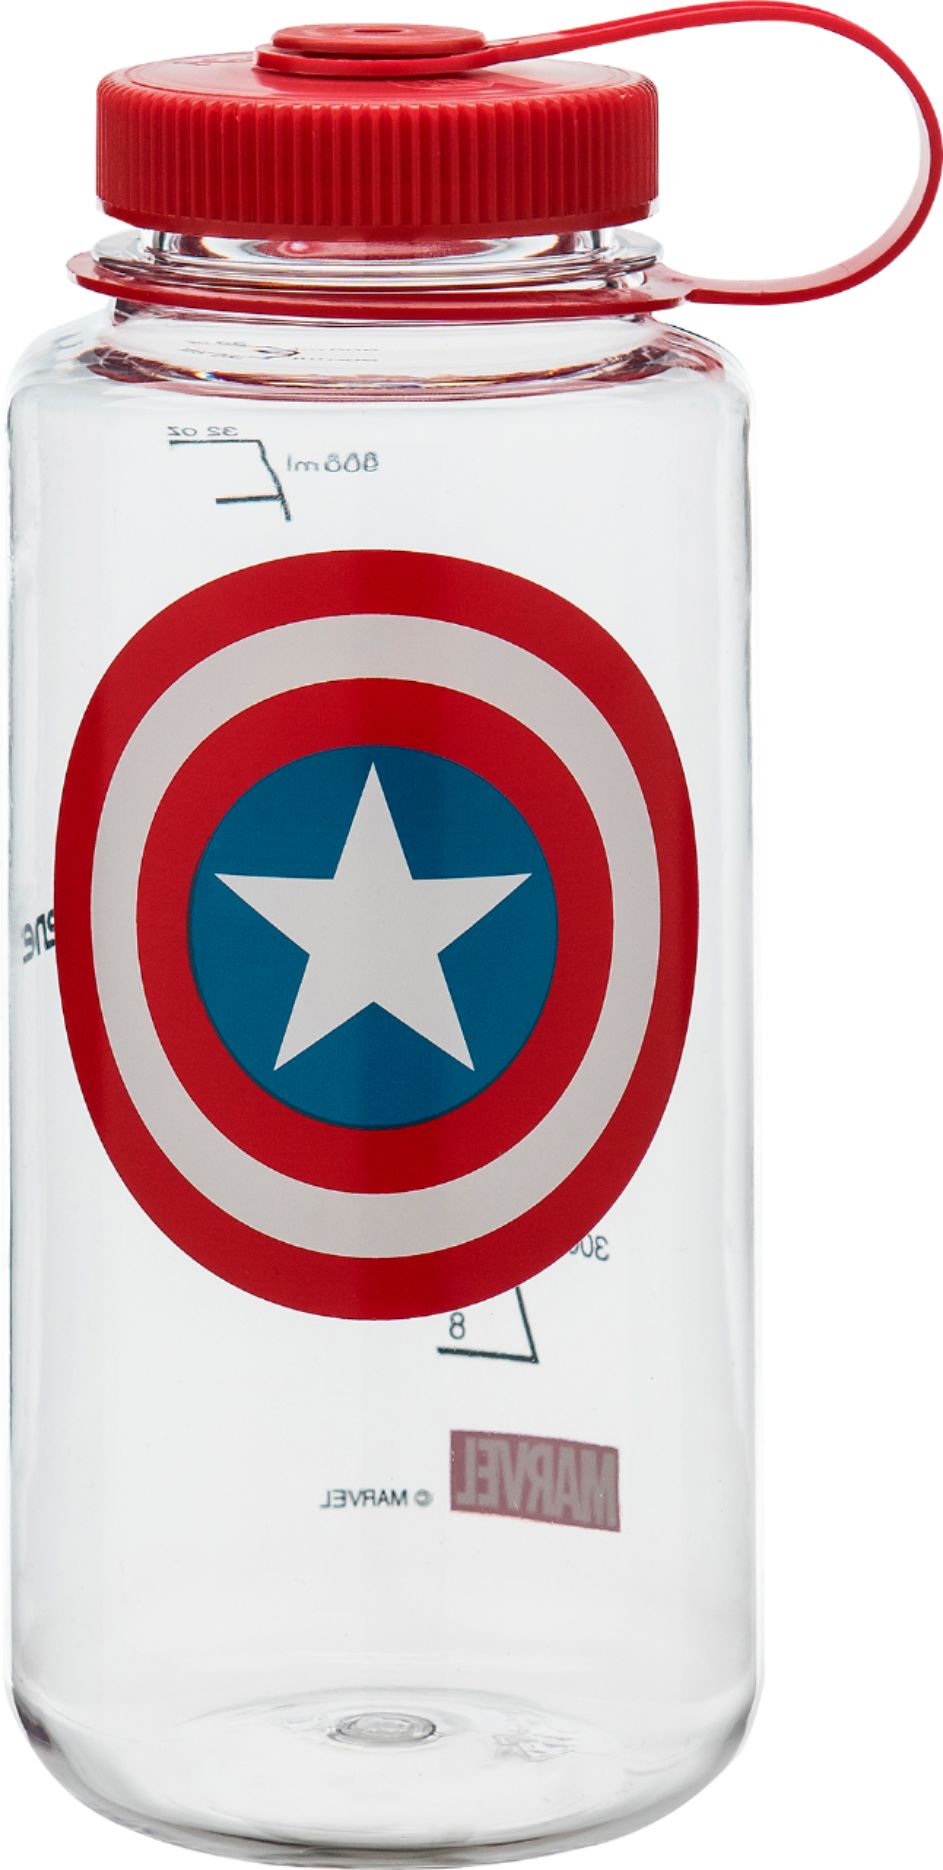 Captain America: Civil War 24 oz. Tritan Sport Water Bottle